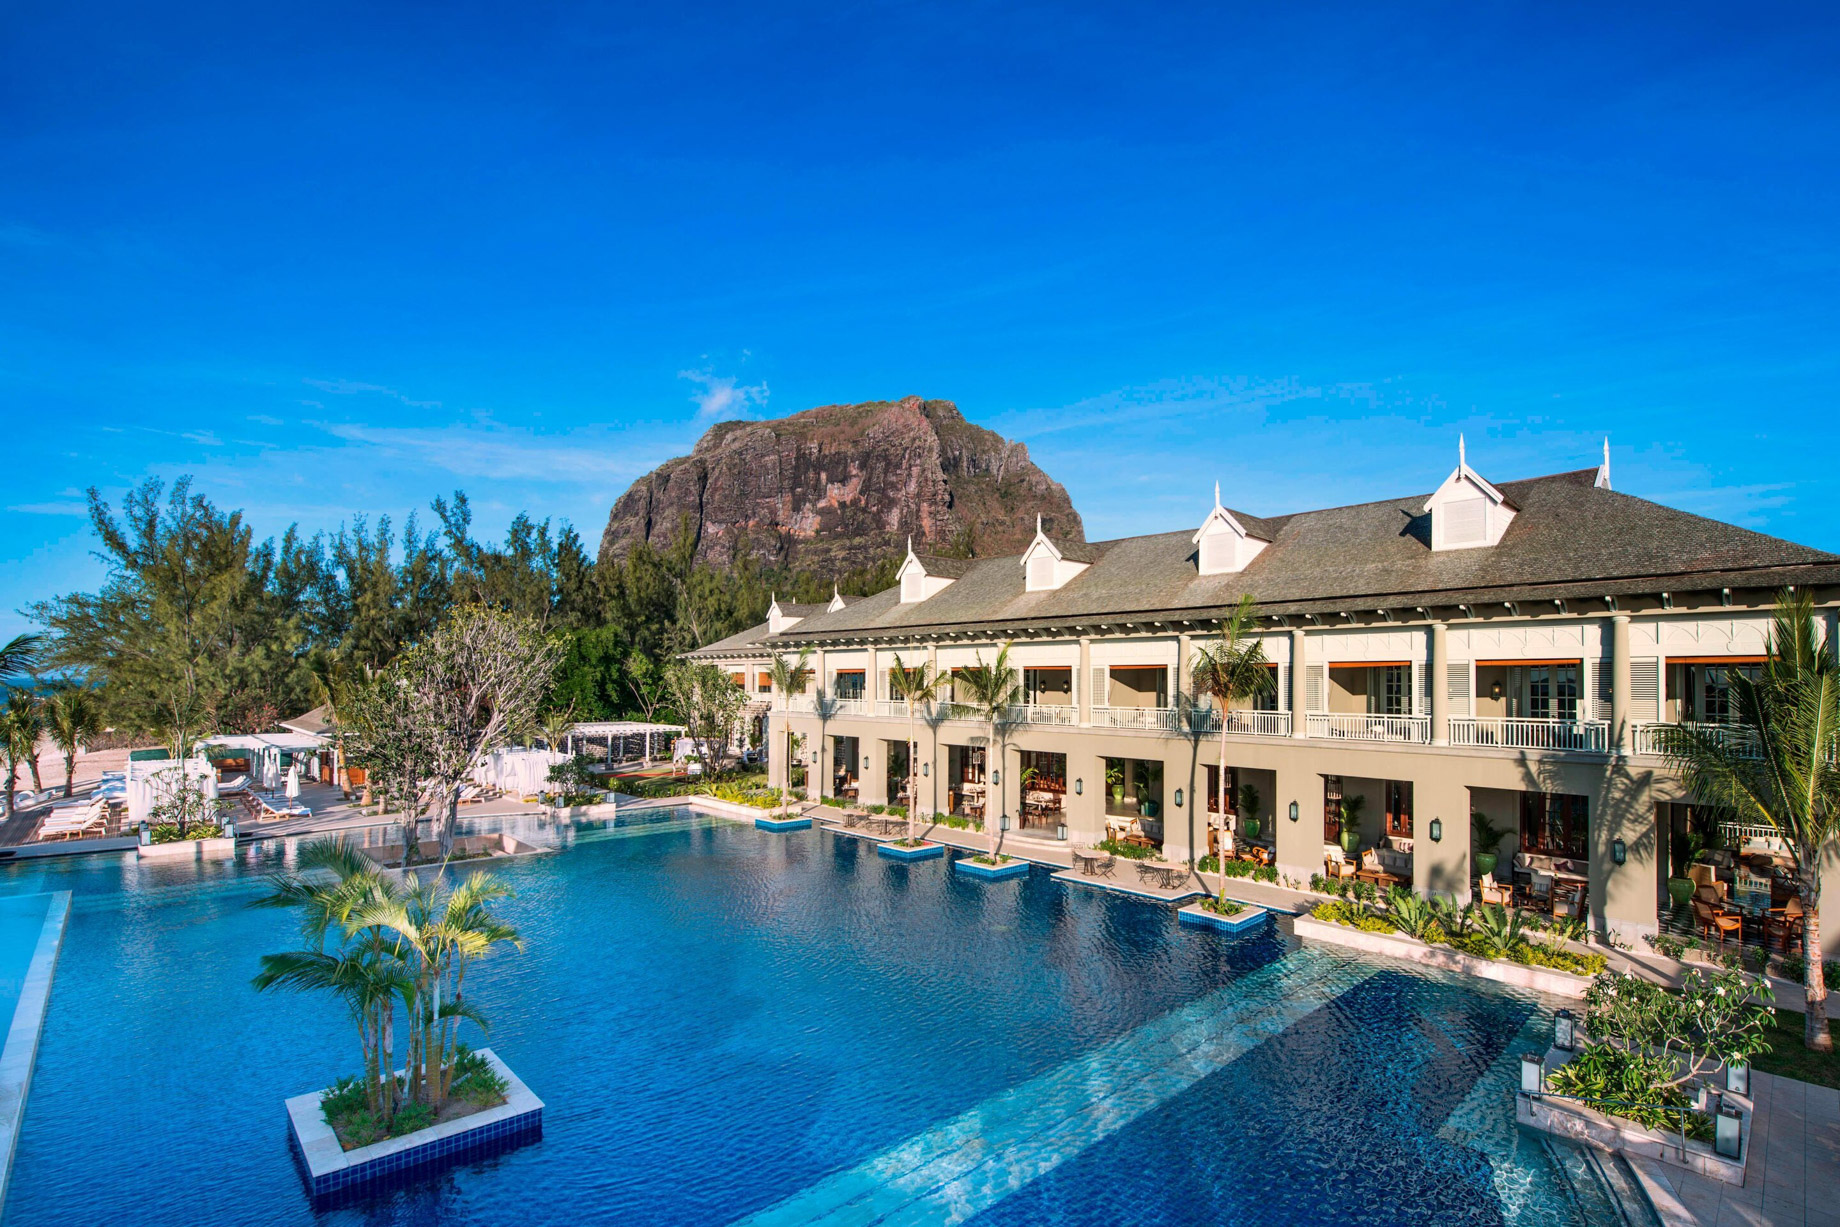 JW Marriott Mauritius Resort – Mauritius – Manor House and Main Pool